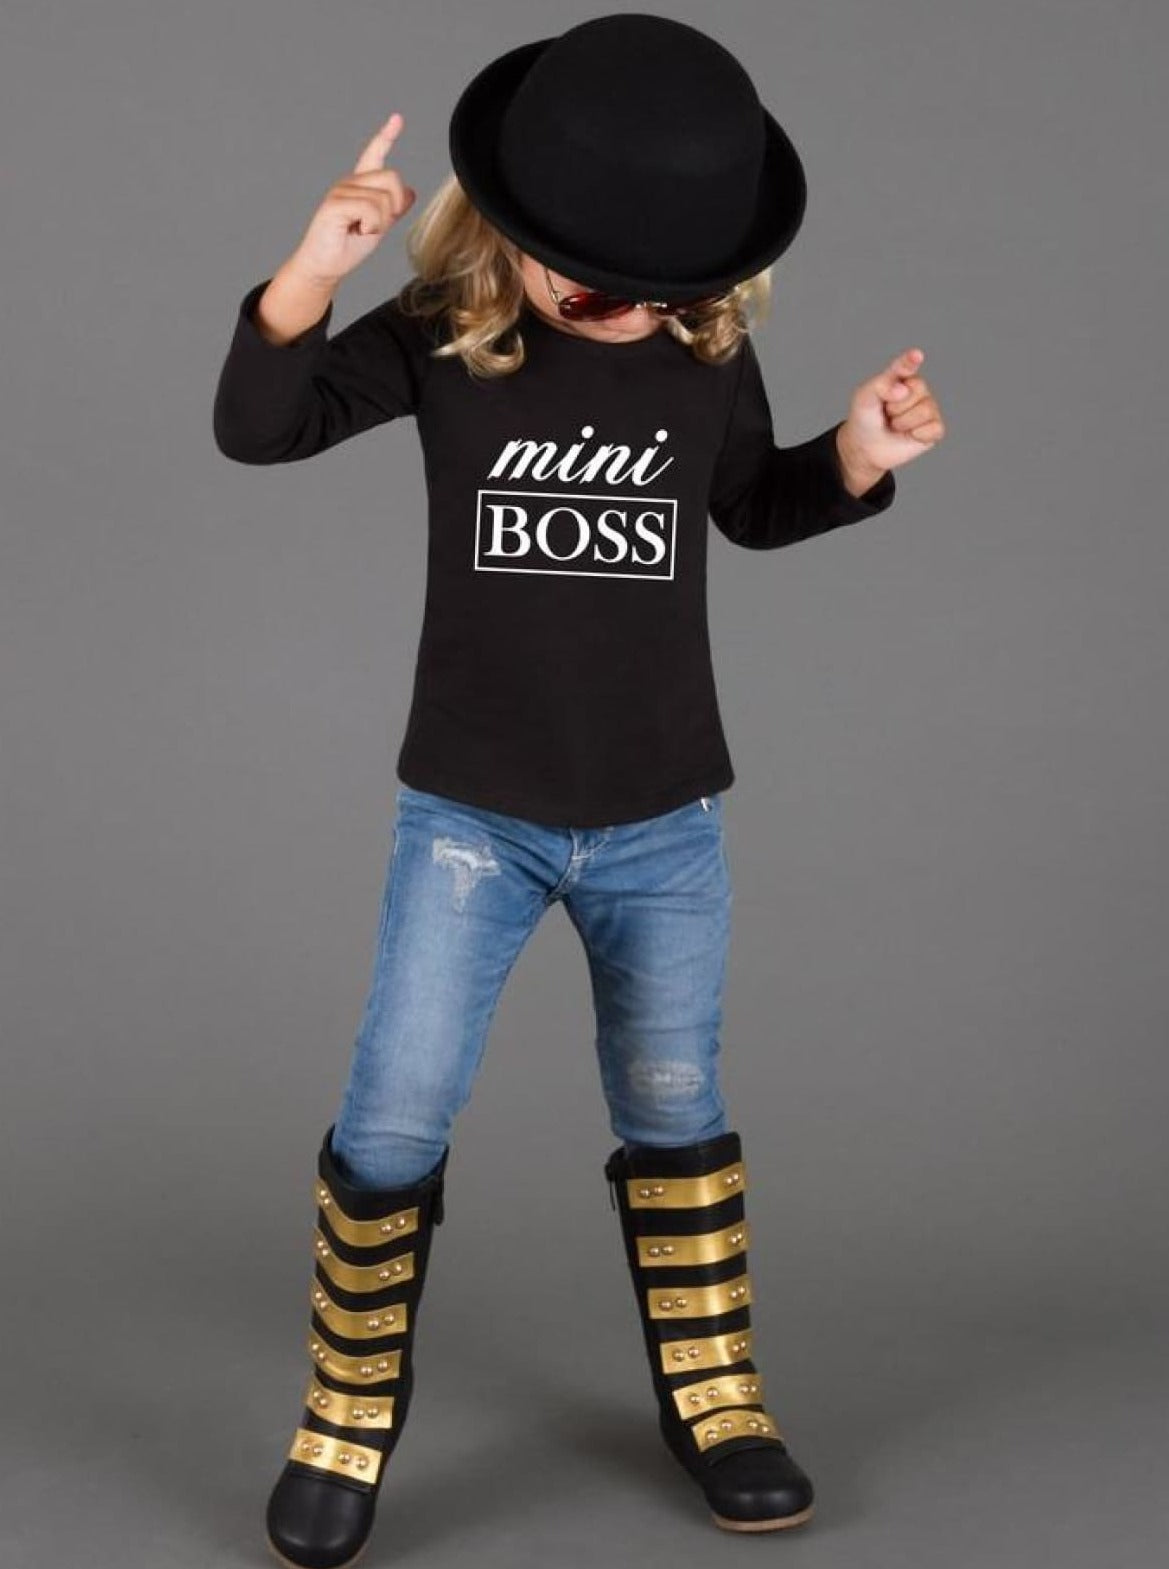 Girls Cute Tops | Mini Boss Long Sleeve Top - Mia Belle Girls